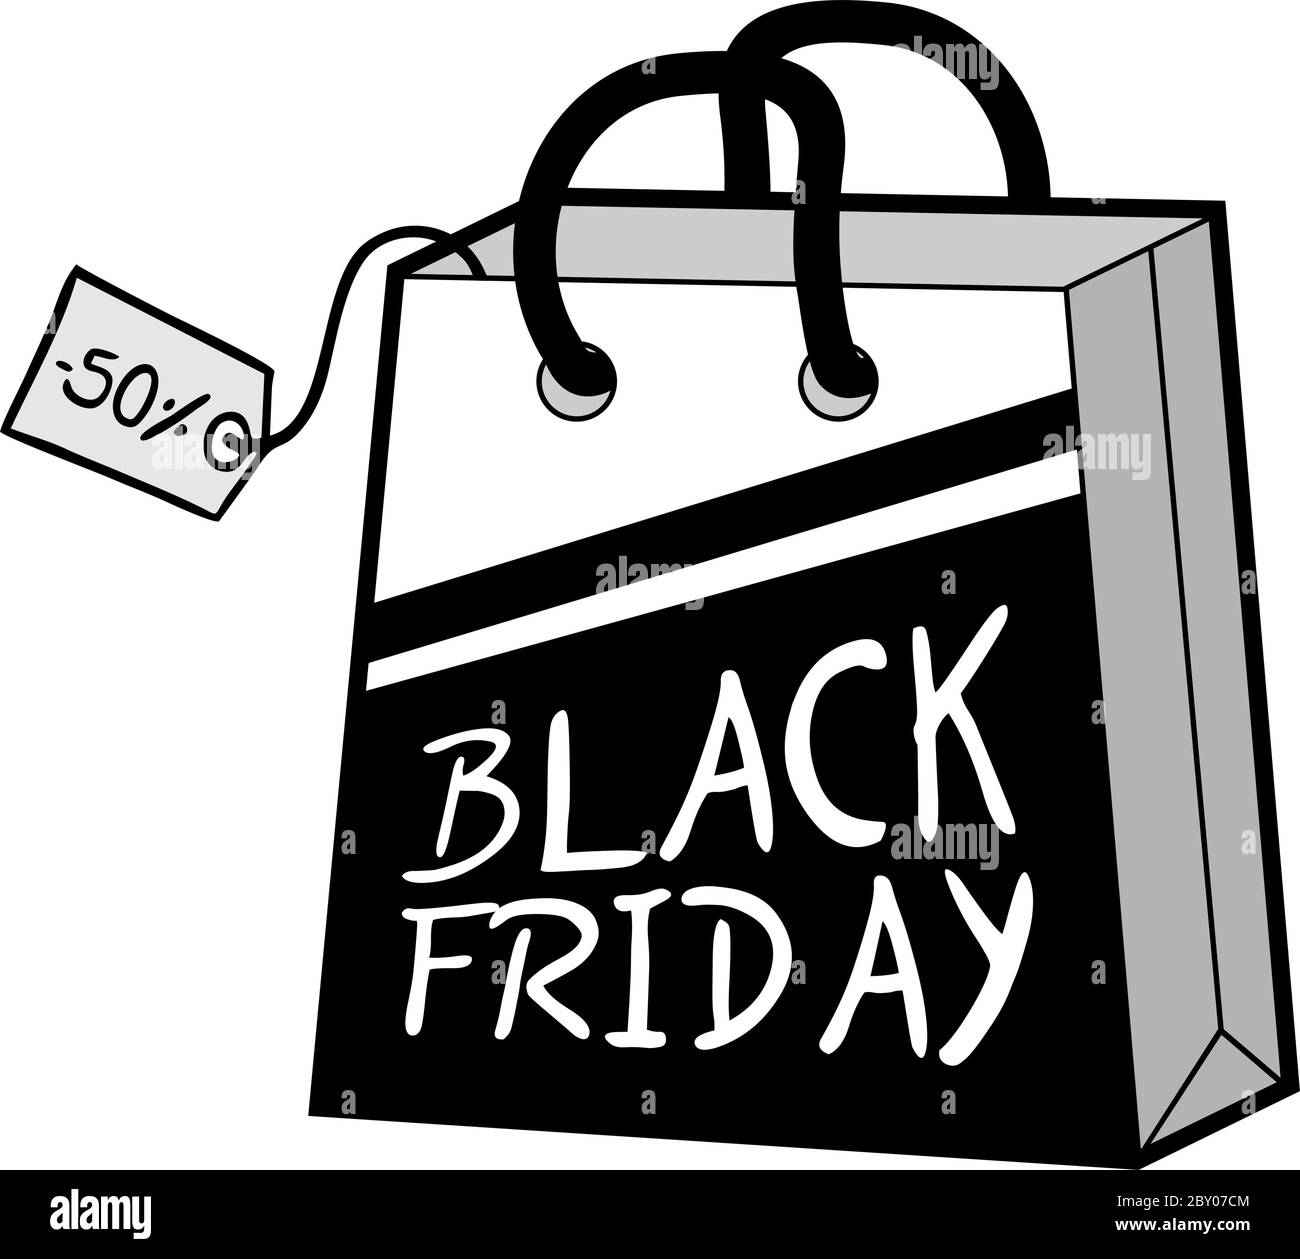 Black Friday symbol Stock Vector